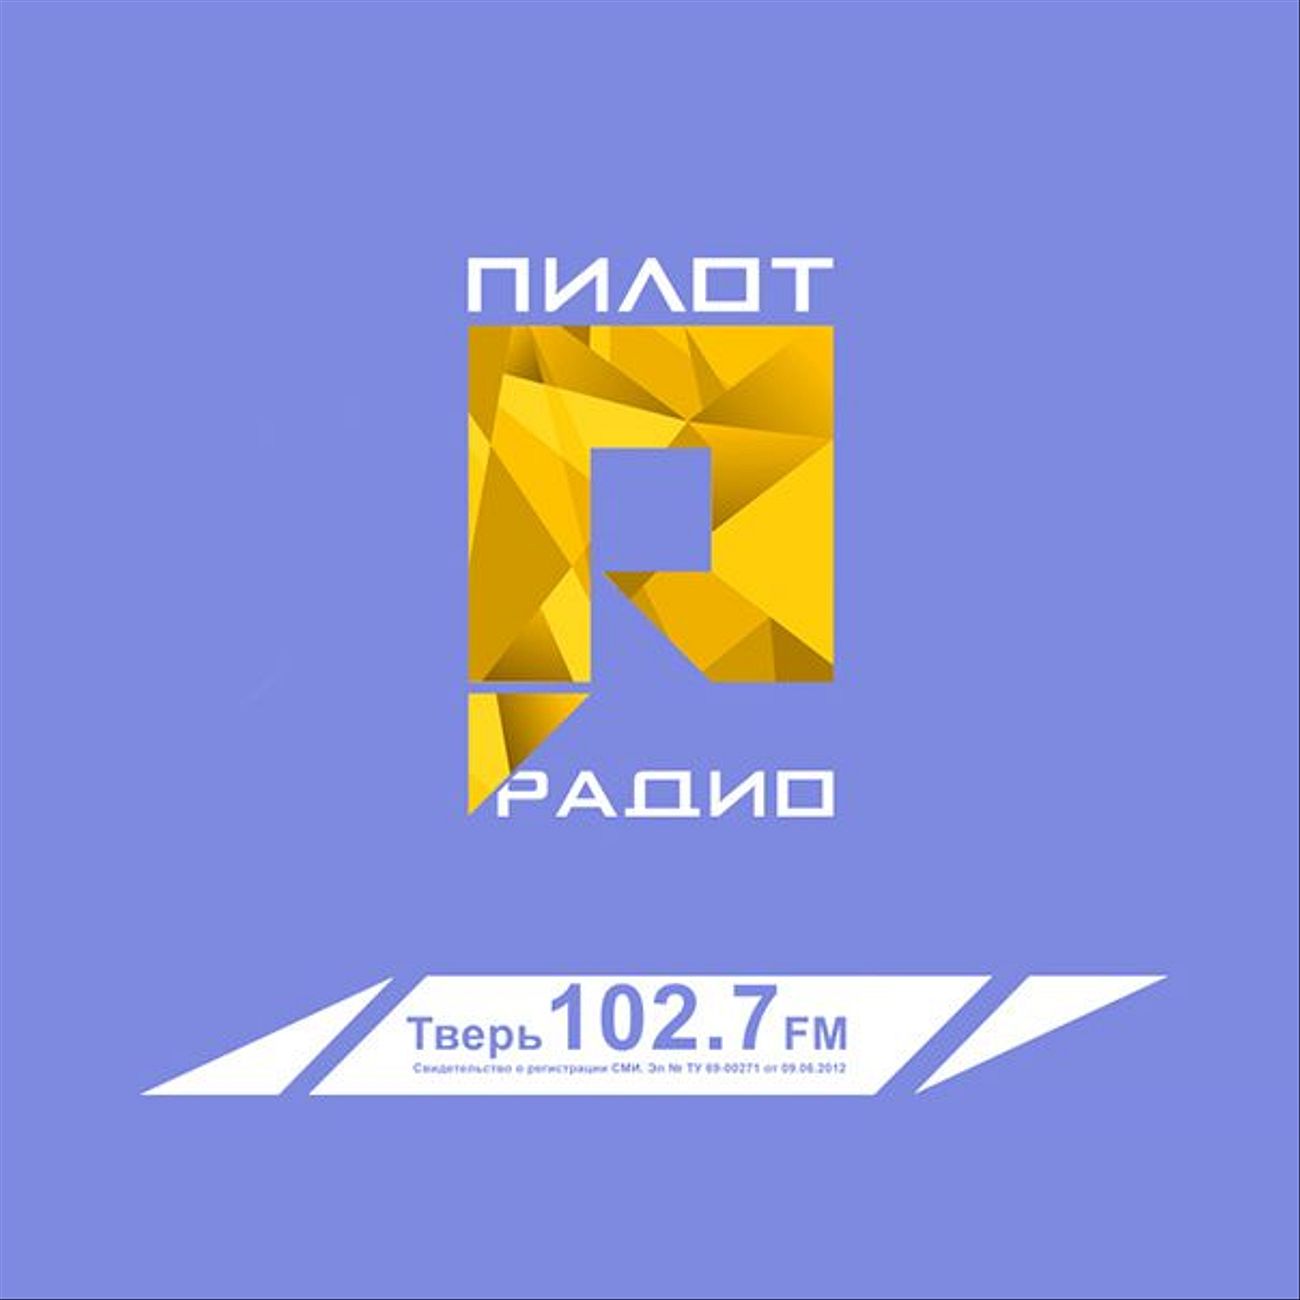 Пилот-радио (Dj Anatolich)